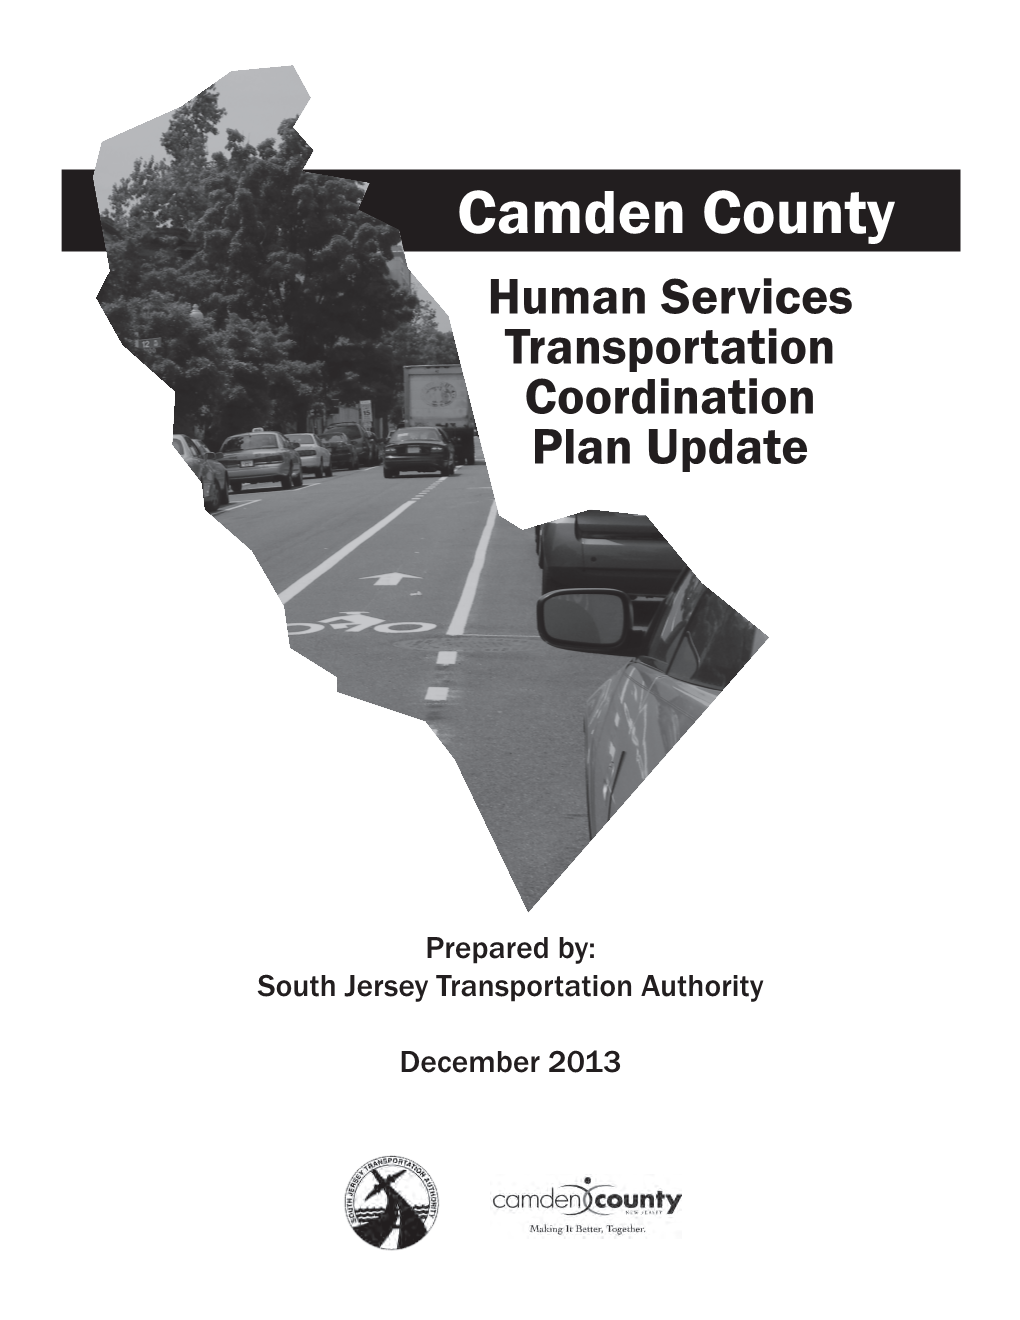 Camden County Human Services Transportation Coordination Plan Update